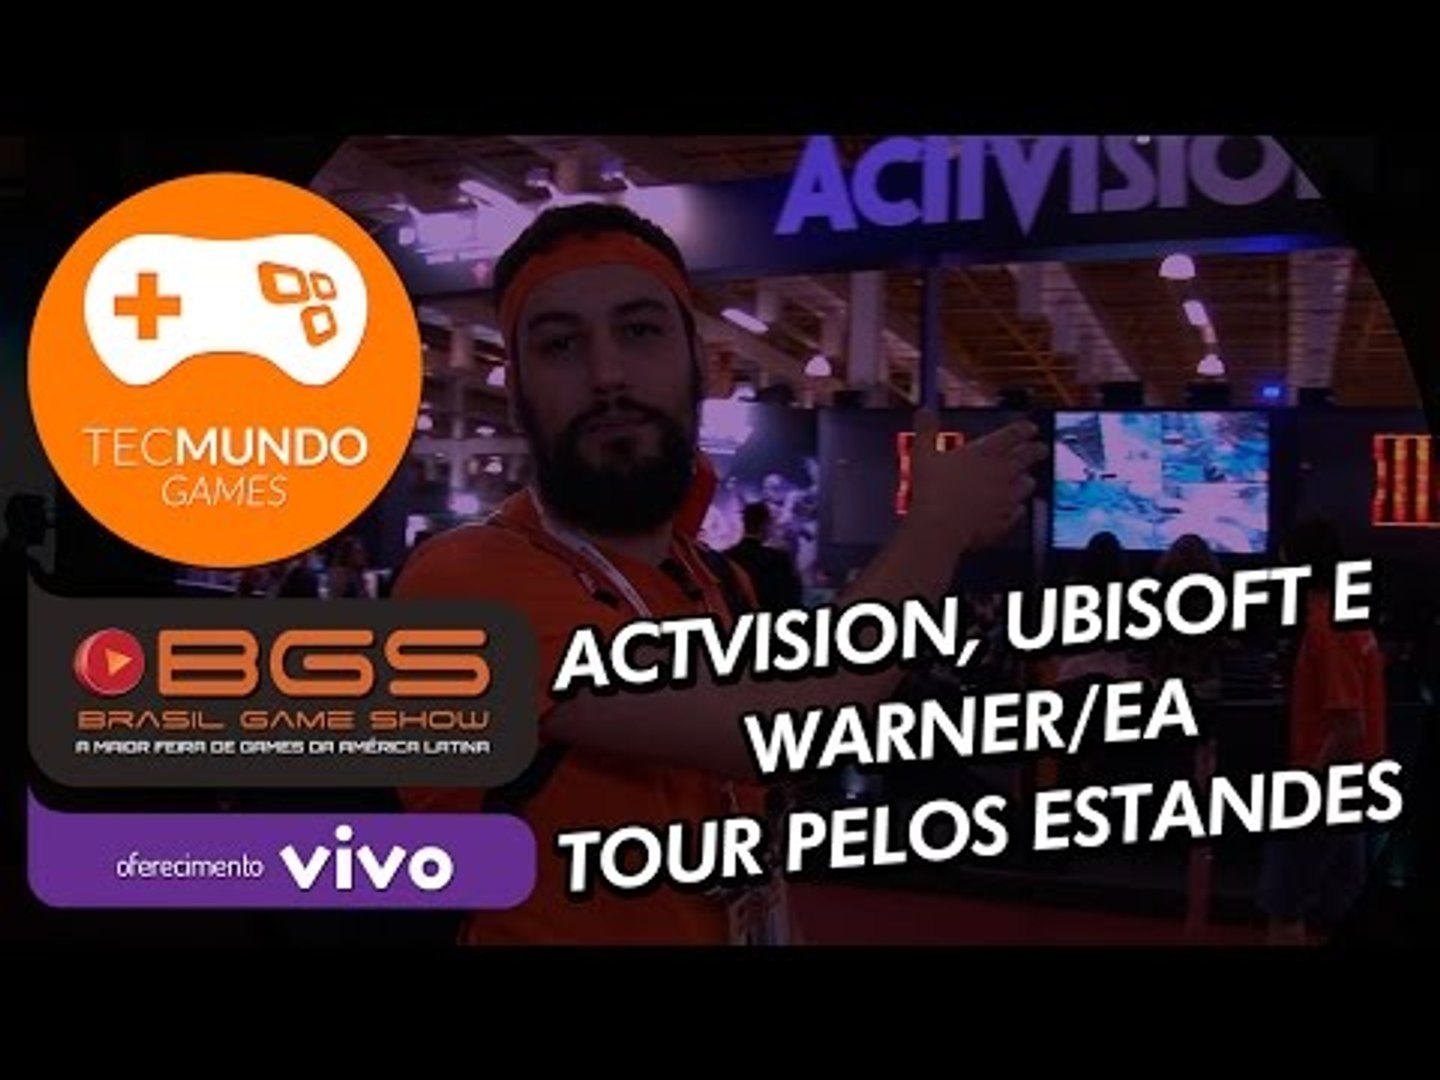 Activision, Ubisoft e Warner/EA: Tour pelos estandes [BGS 2015] - TecMundo  Games - Vídeo Dailymotion